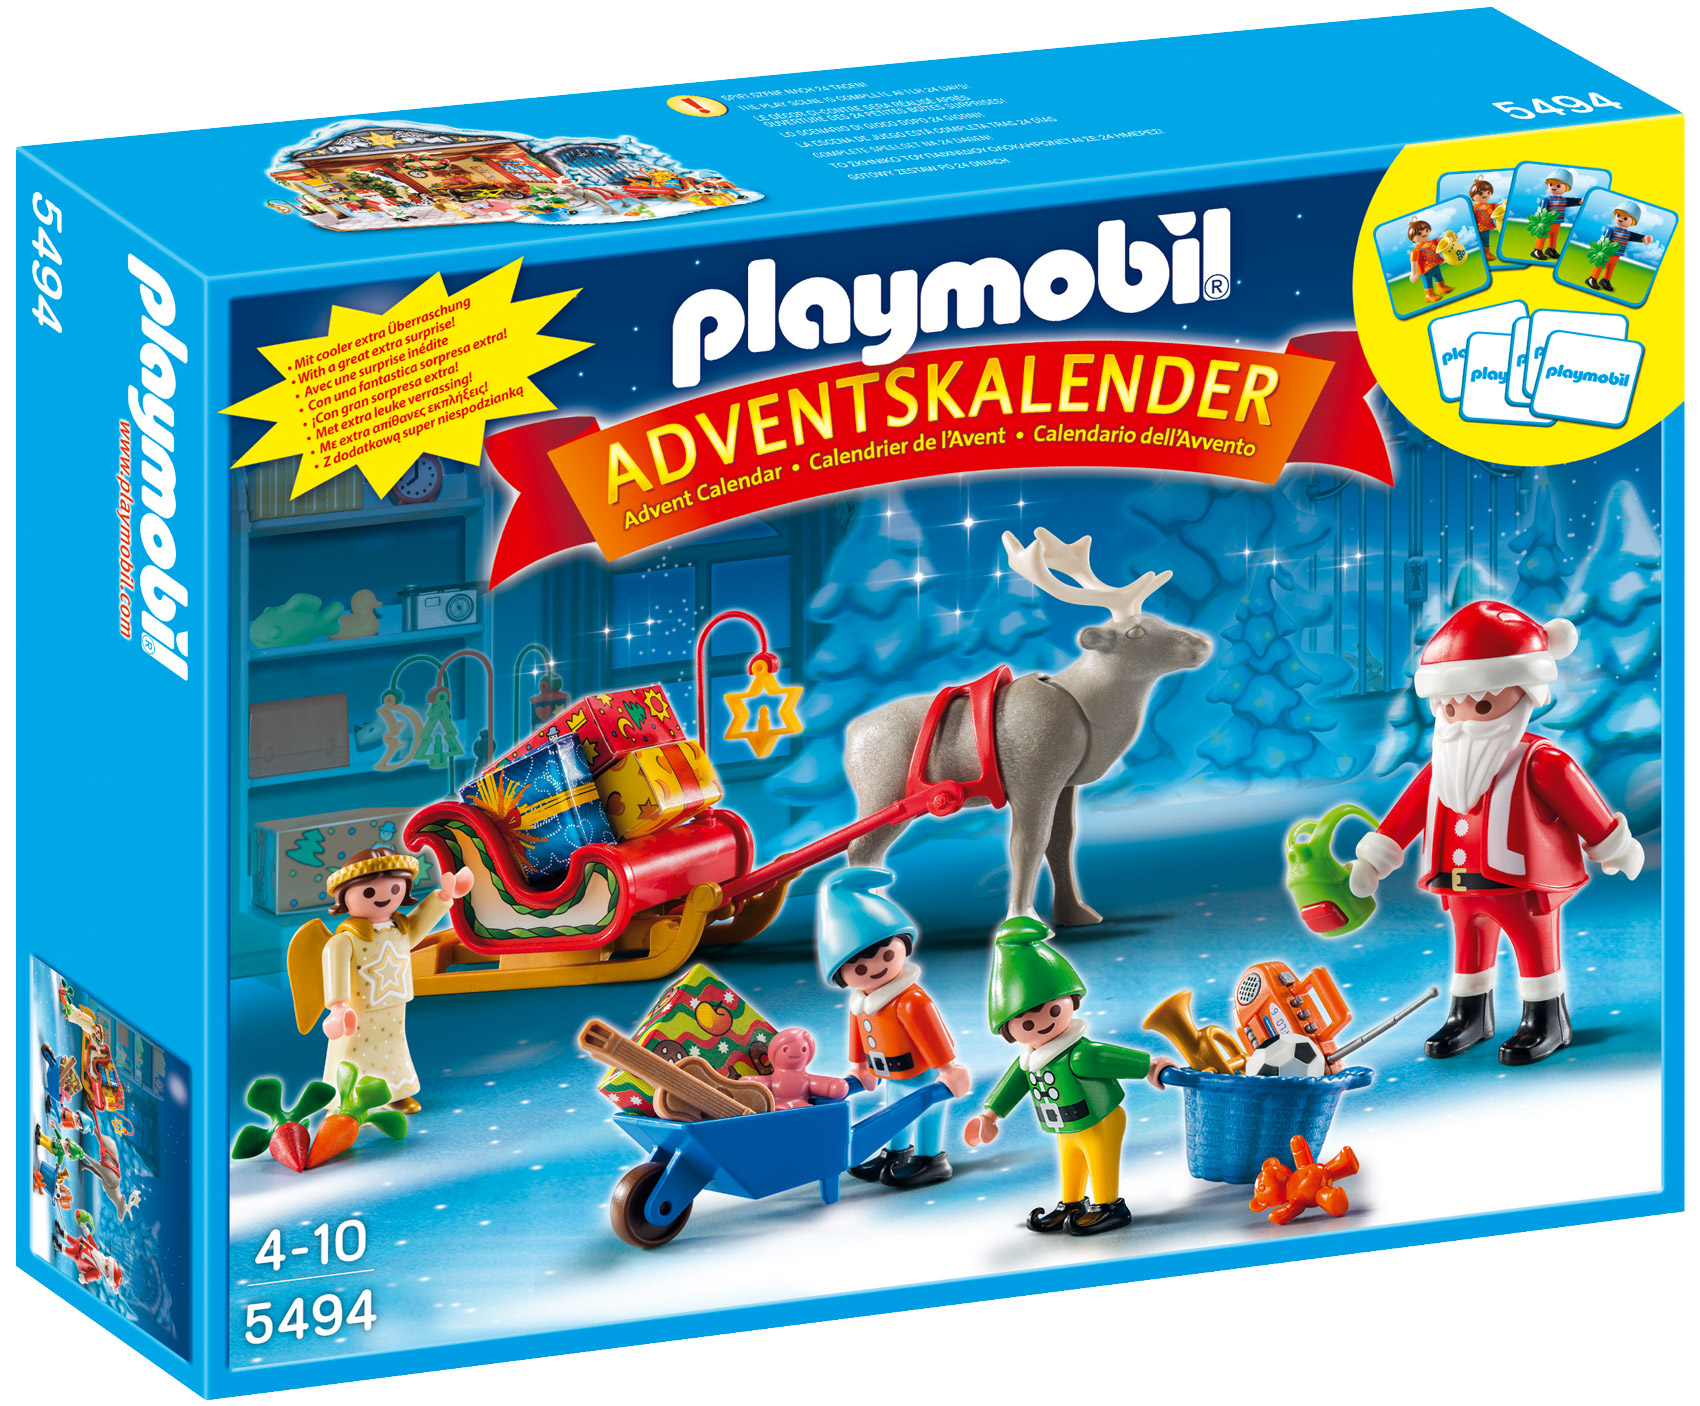 Playmobil - Calendrier de l'Avent Réveillon de Noël - 5496